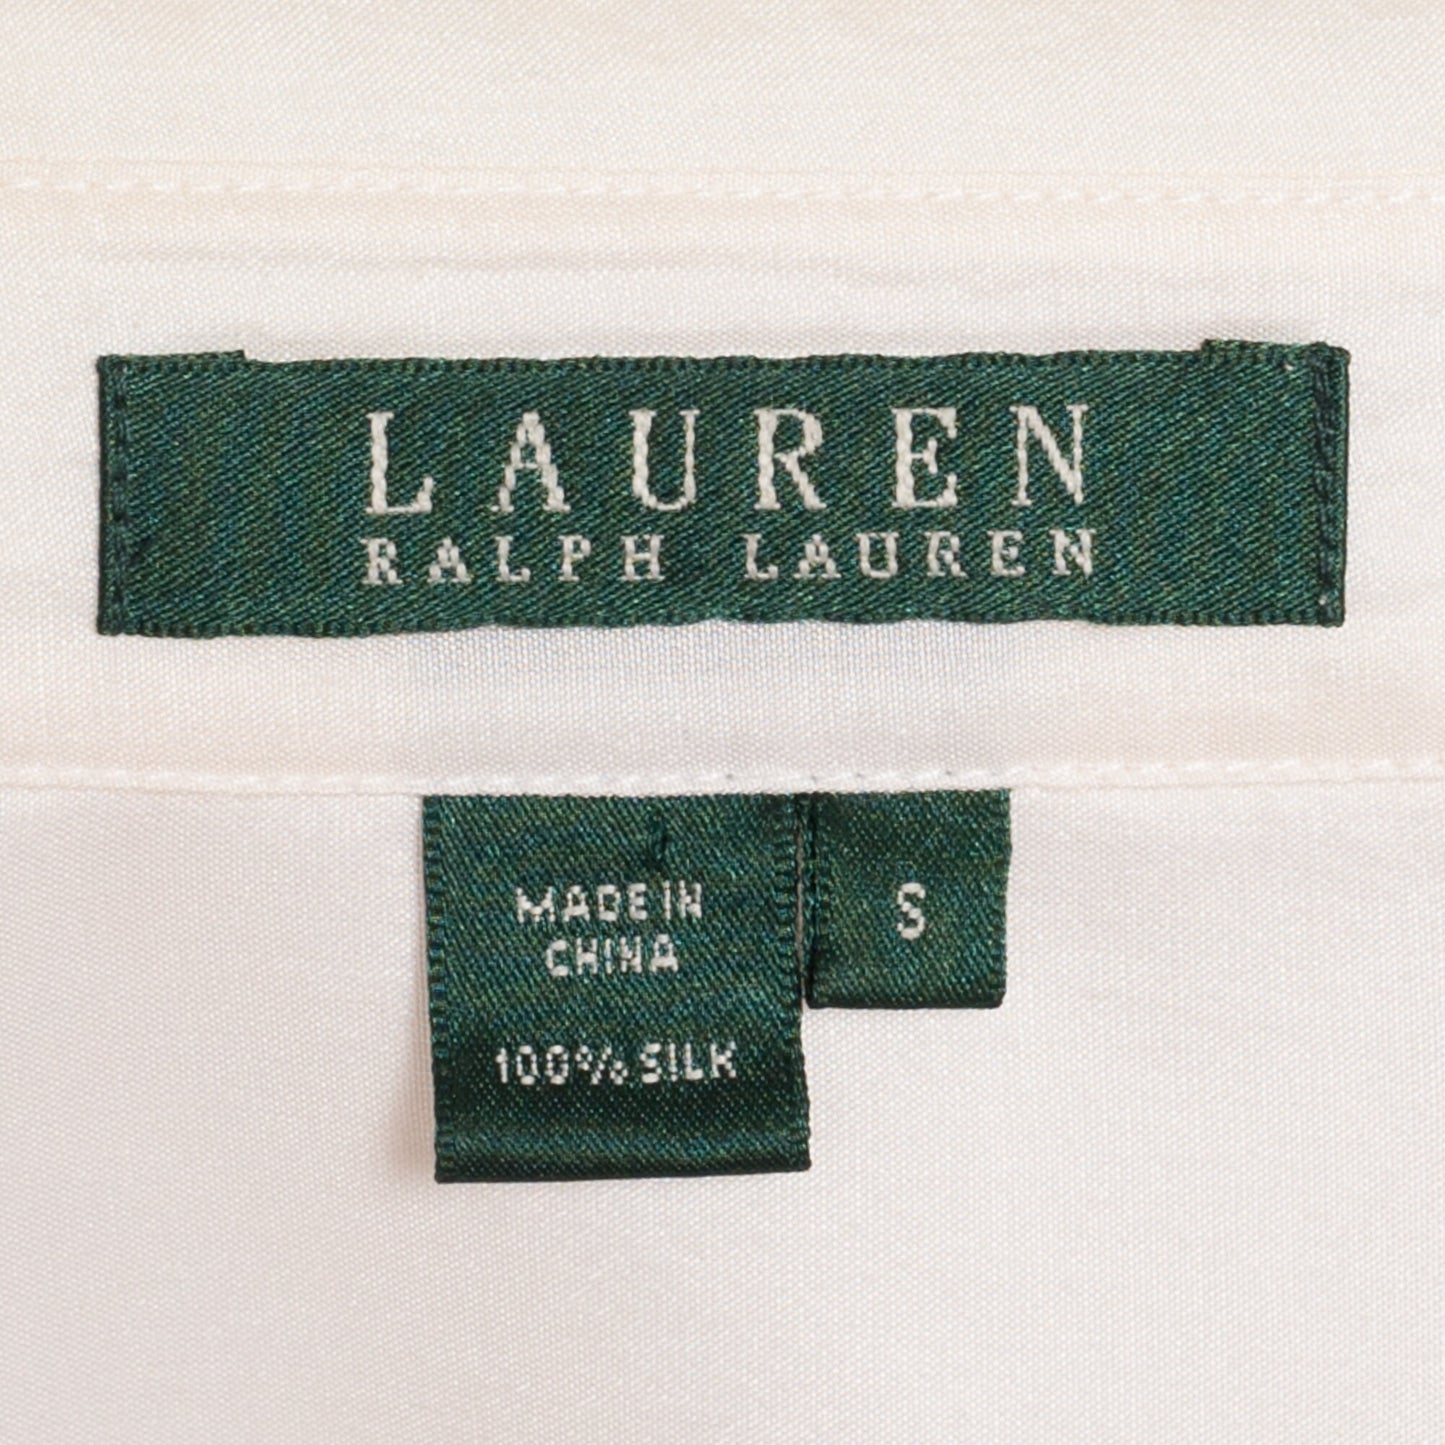 90s Ralph Lauren White Silk Blouse - Small | Vintage Minimalist Oversize Long Sleeve Button Up Collared Shirt